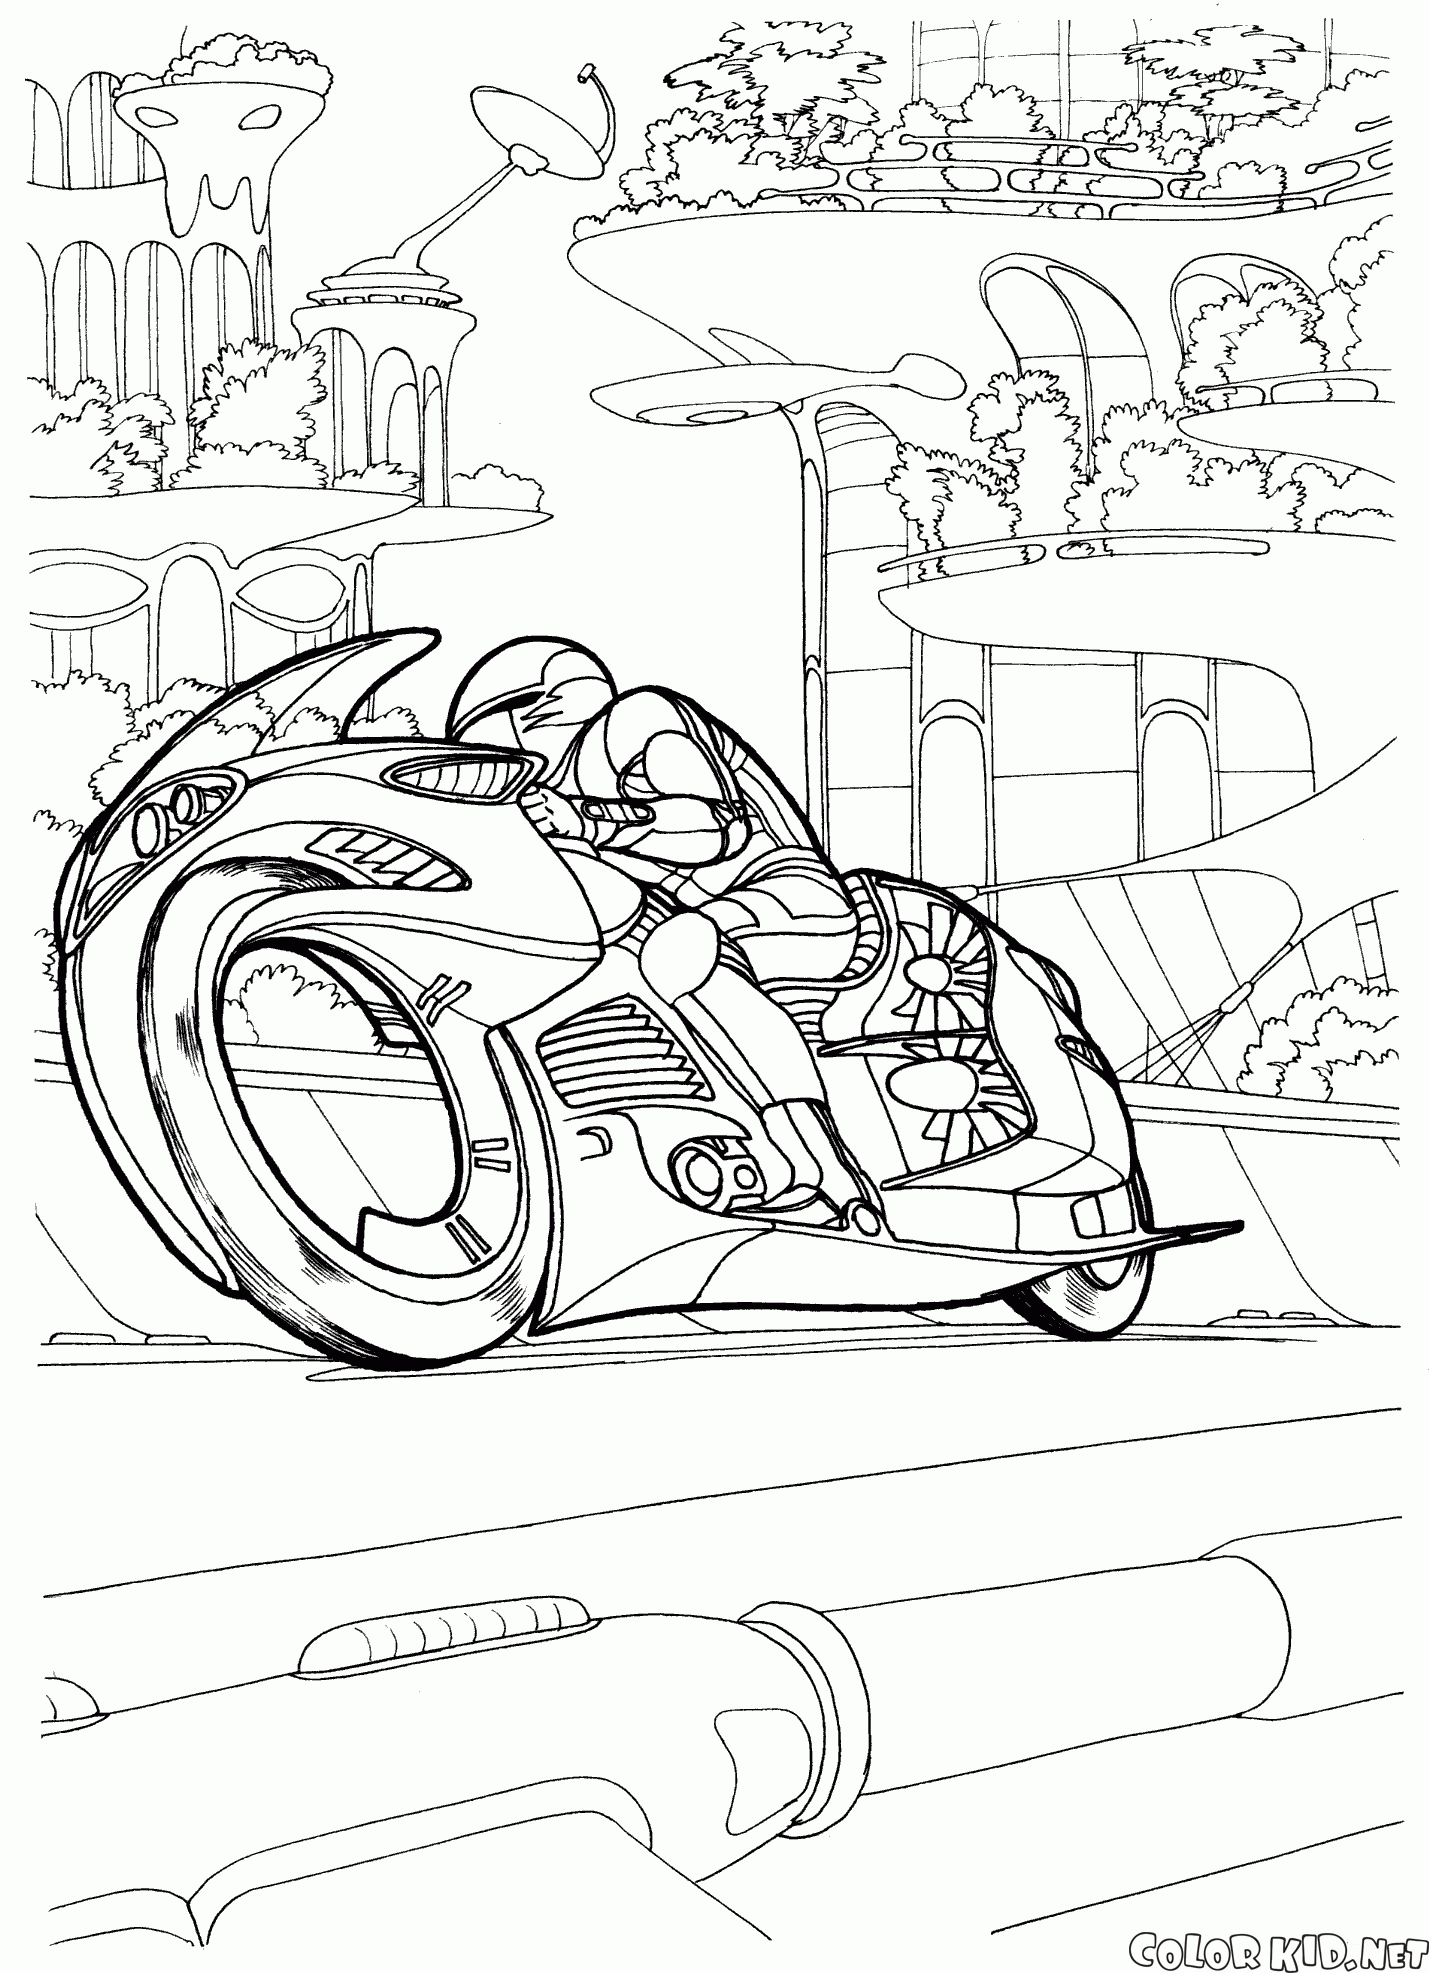 Prototyp motocykla